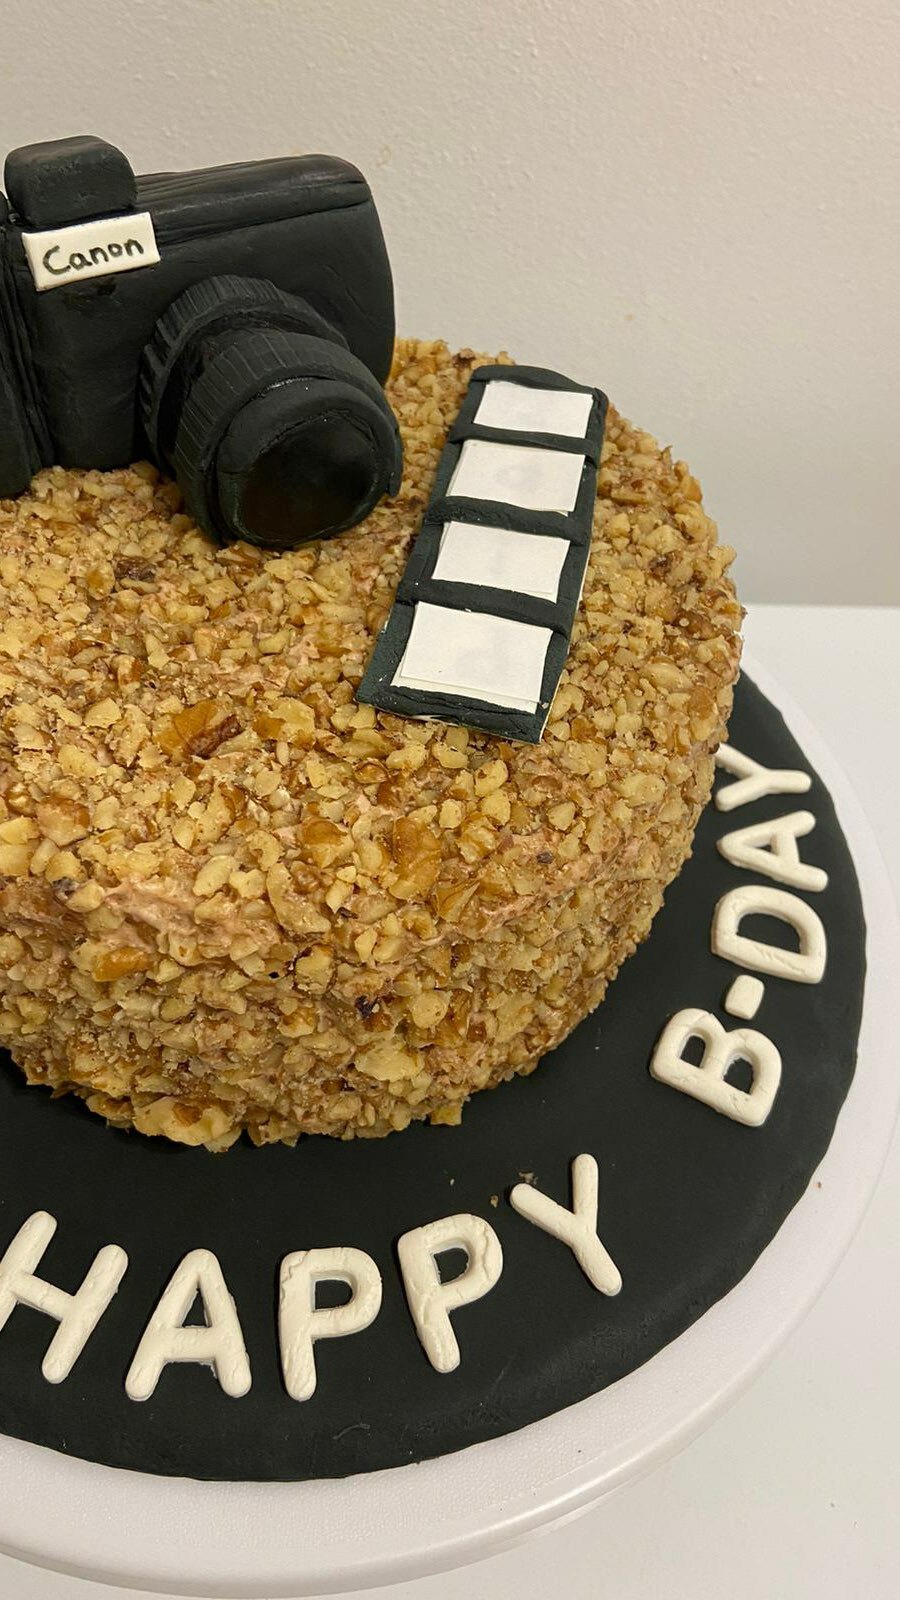 3D Camera Cake - Canon Camera Fondant Cake - 50th Birthday Cake - YouTube